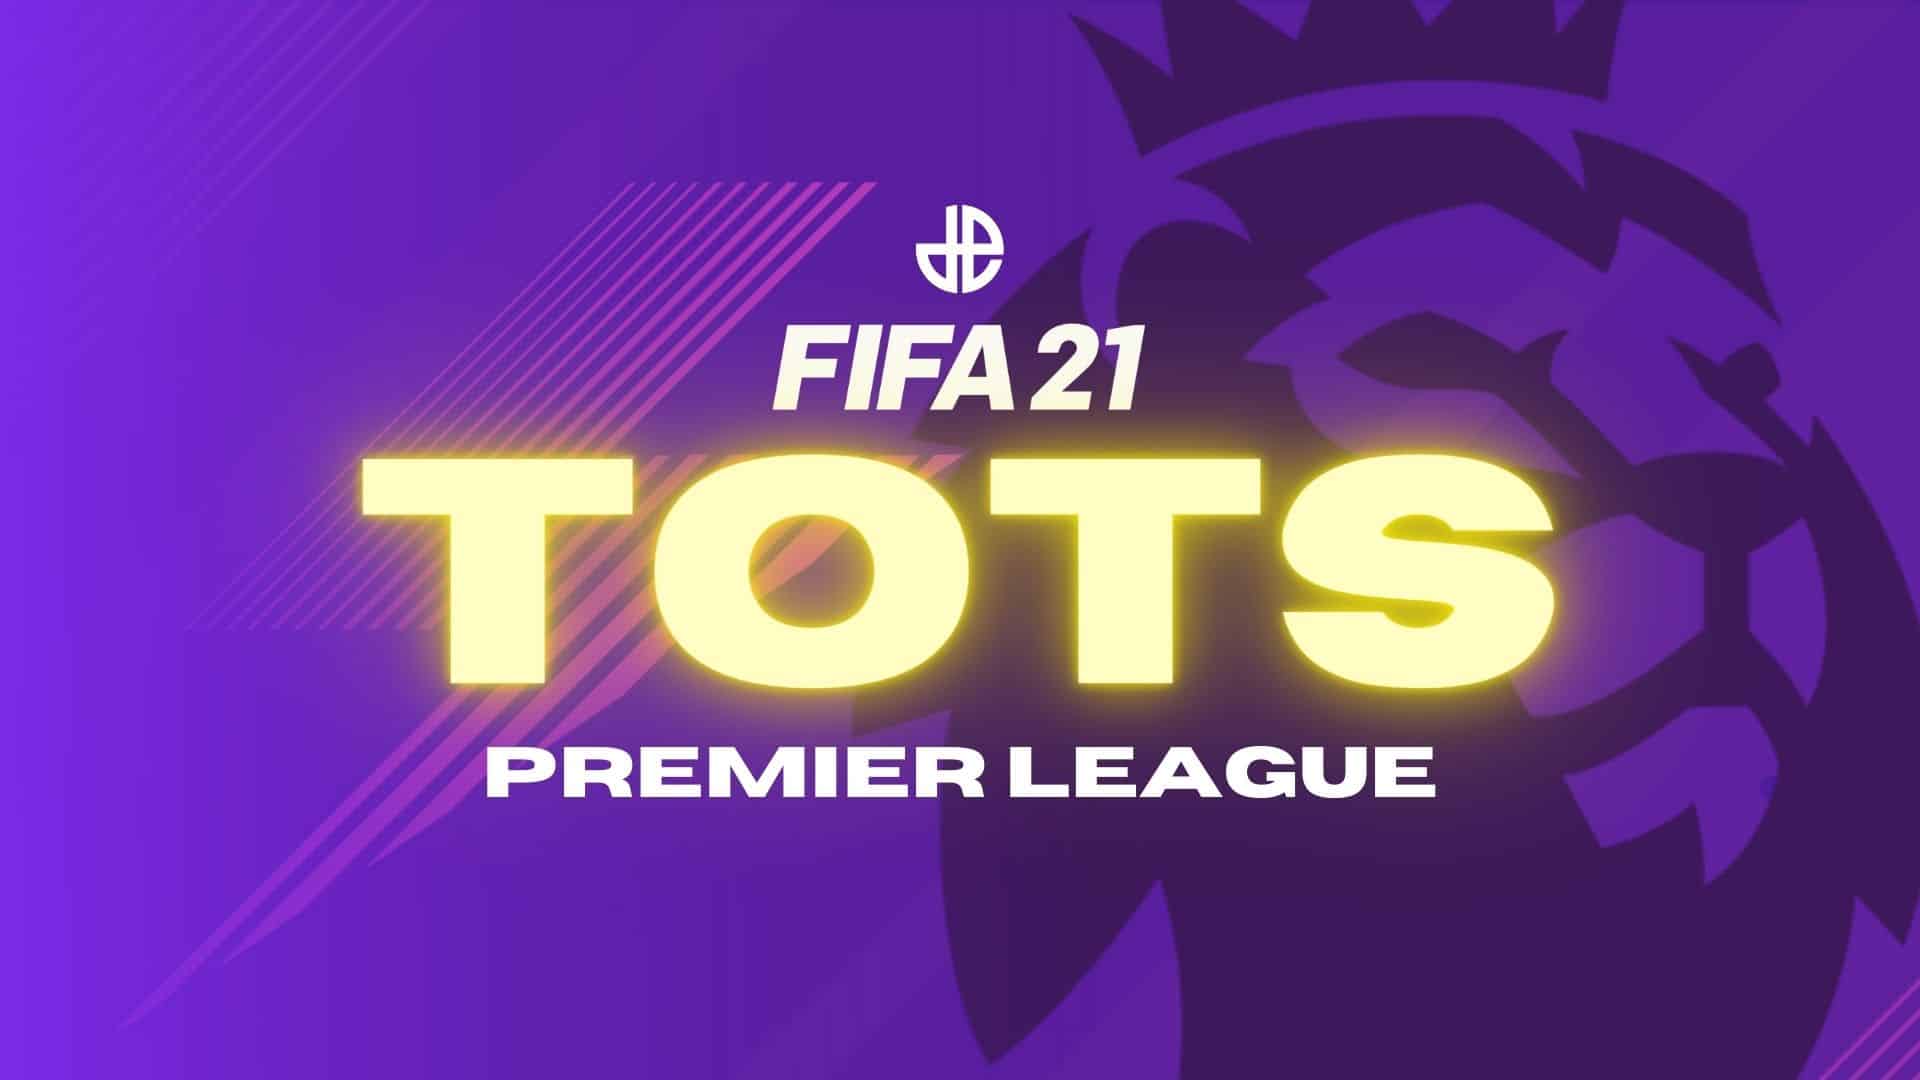 Premier League FIFA 21 Team of the Season released in FUT 2020/21.